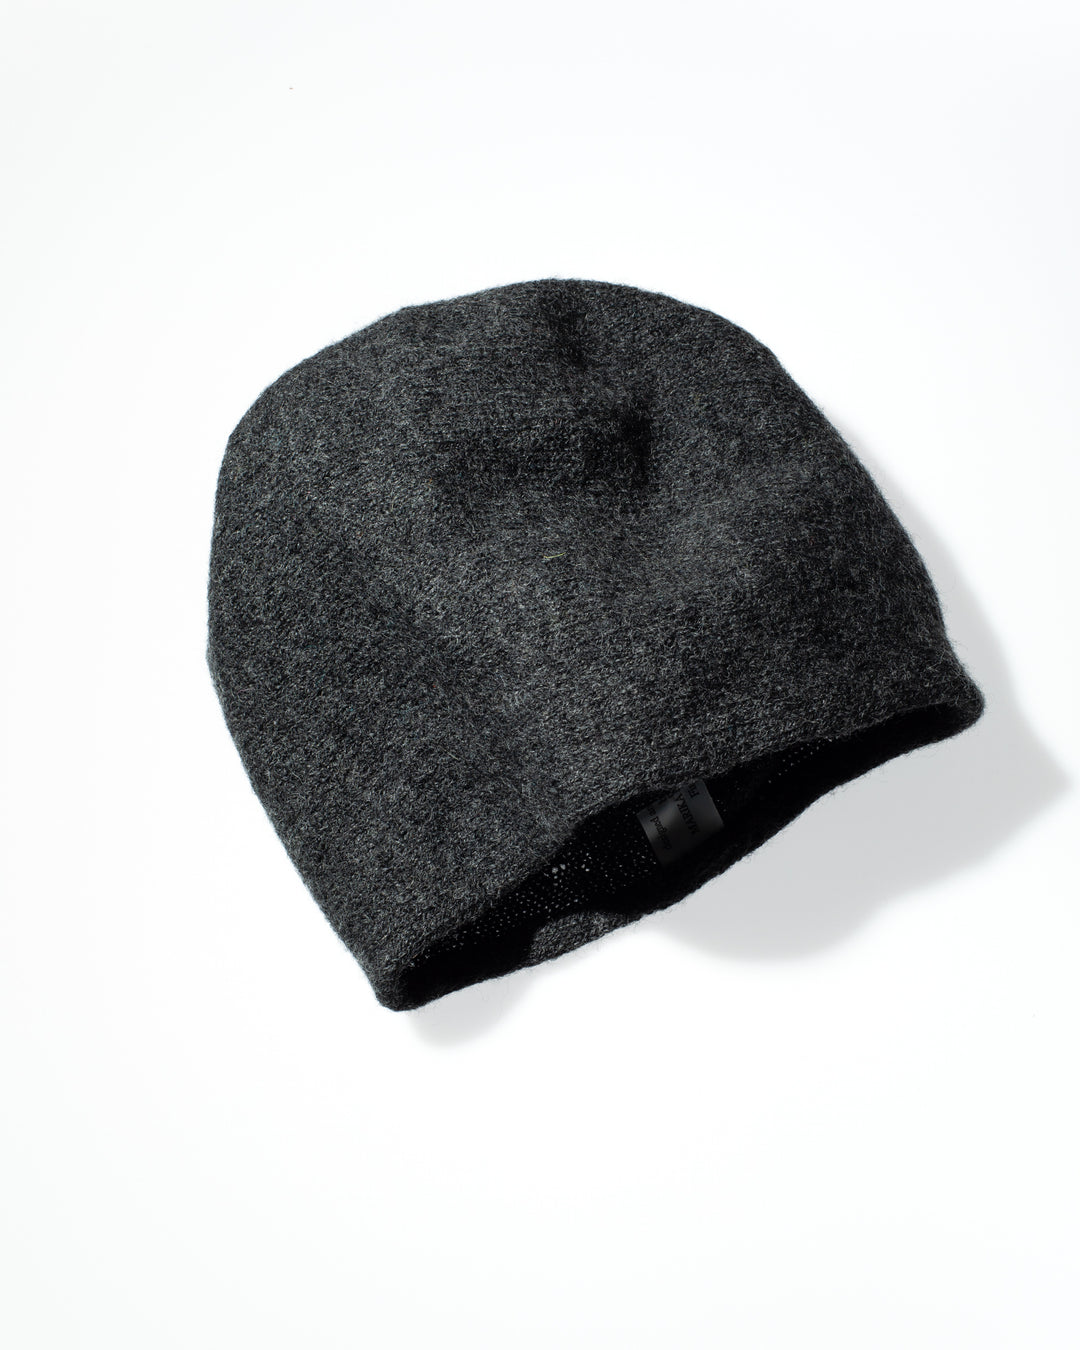 Marika Niskanen Wool Hat, Grey